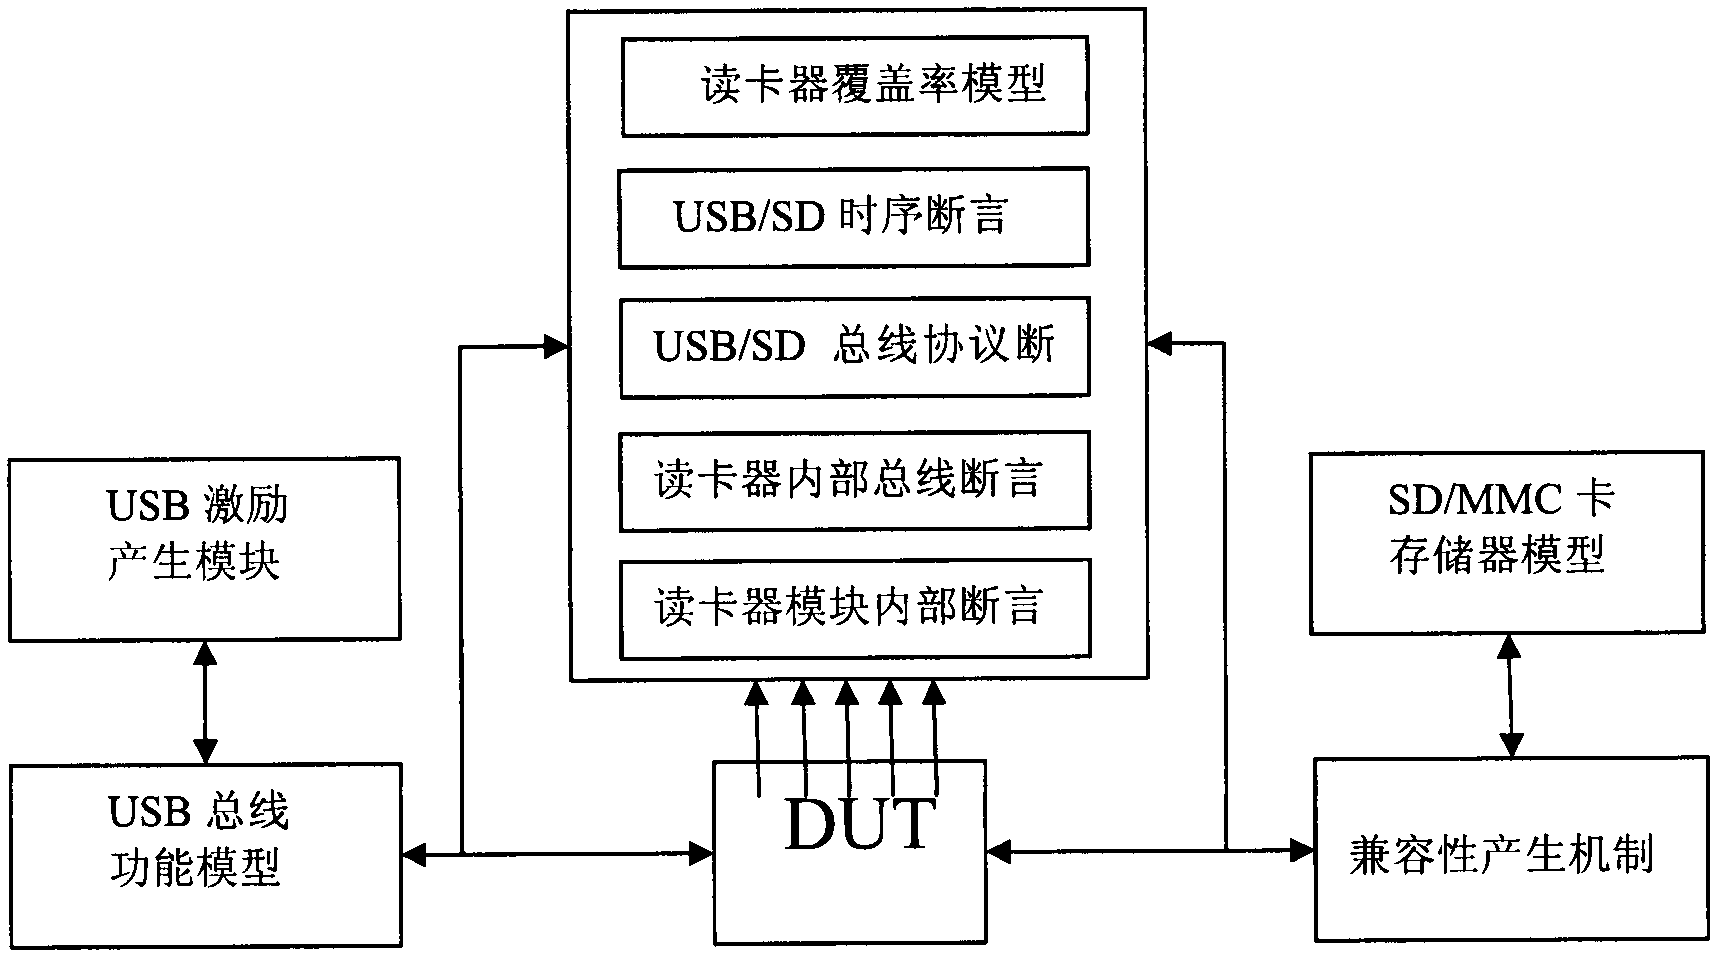 Emulation verification method applied to mobile storage SOC (system on chip) chip